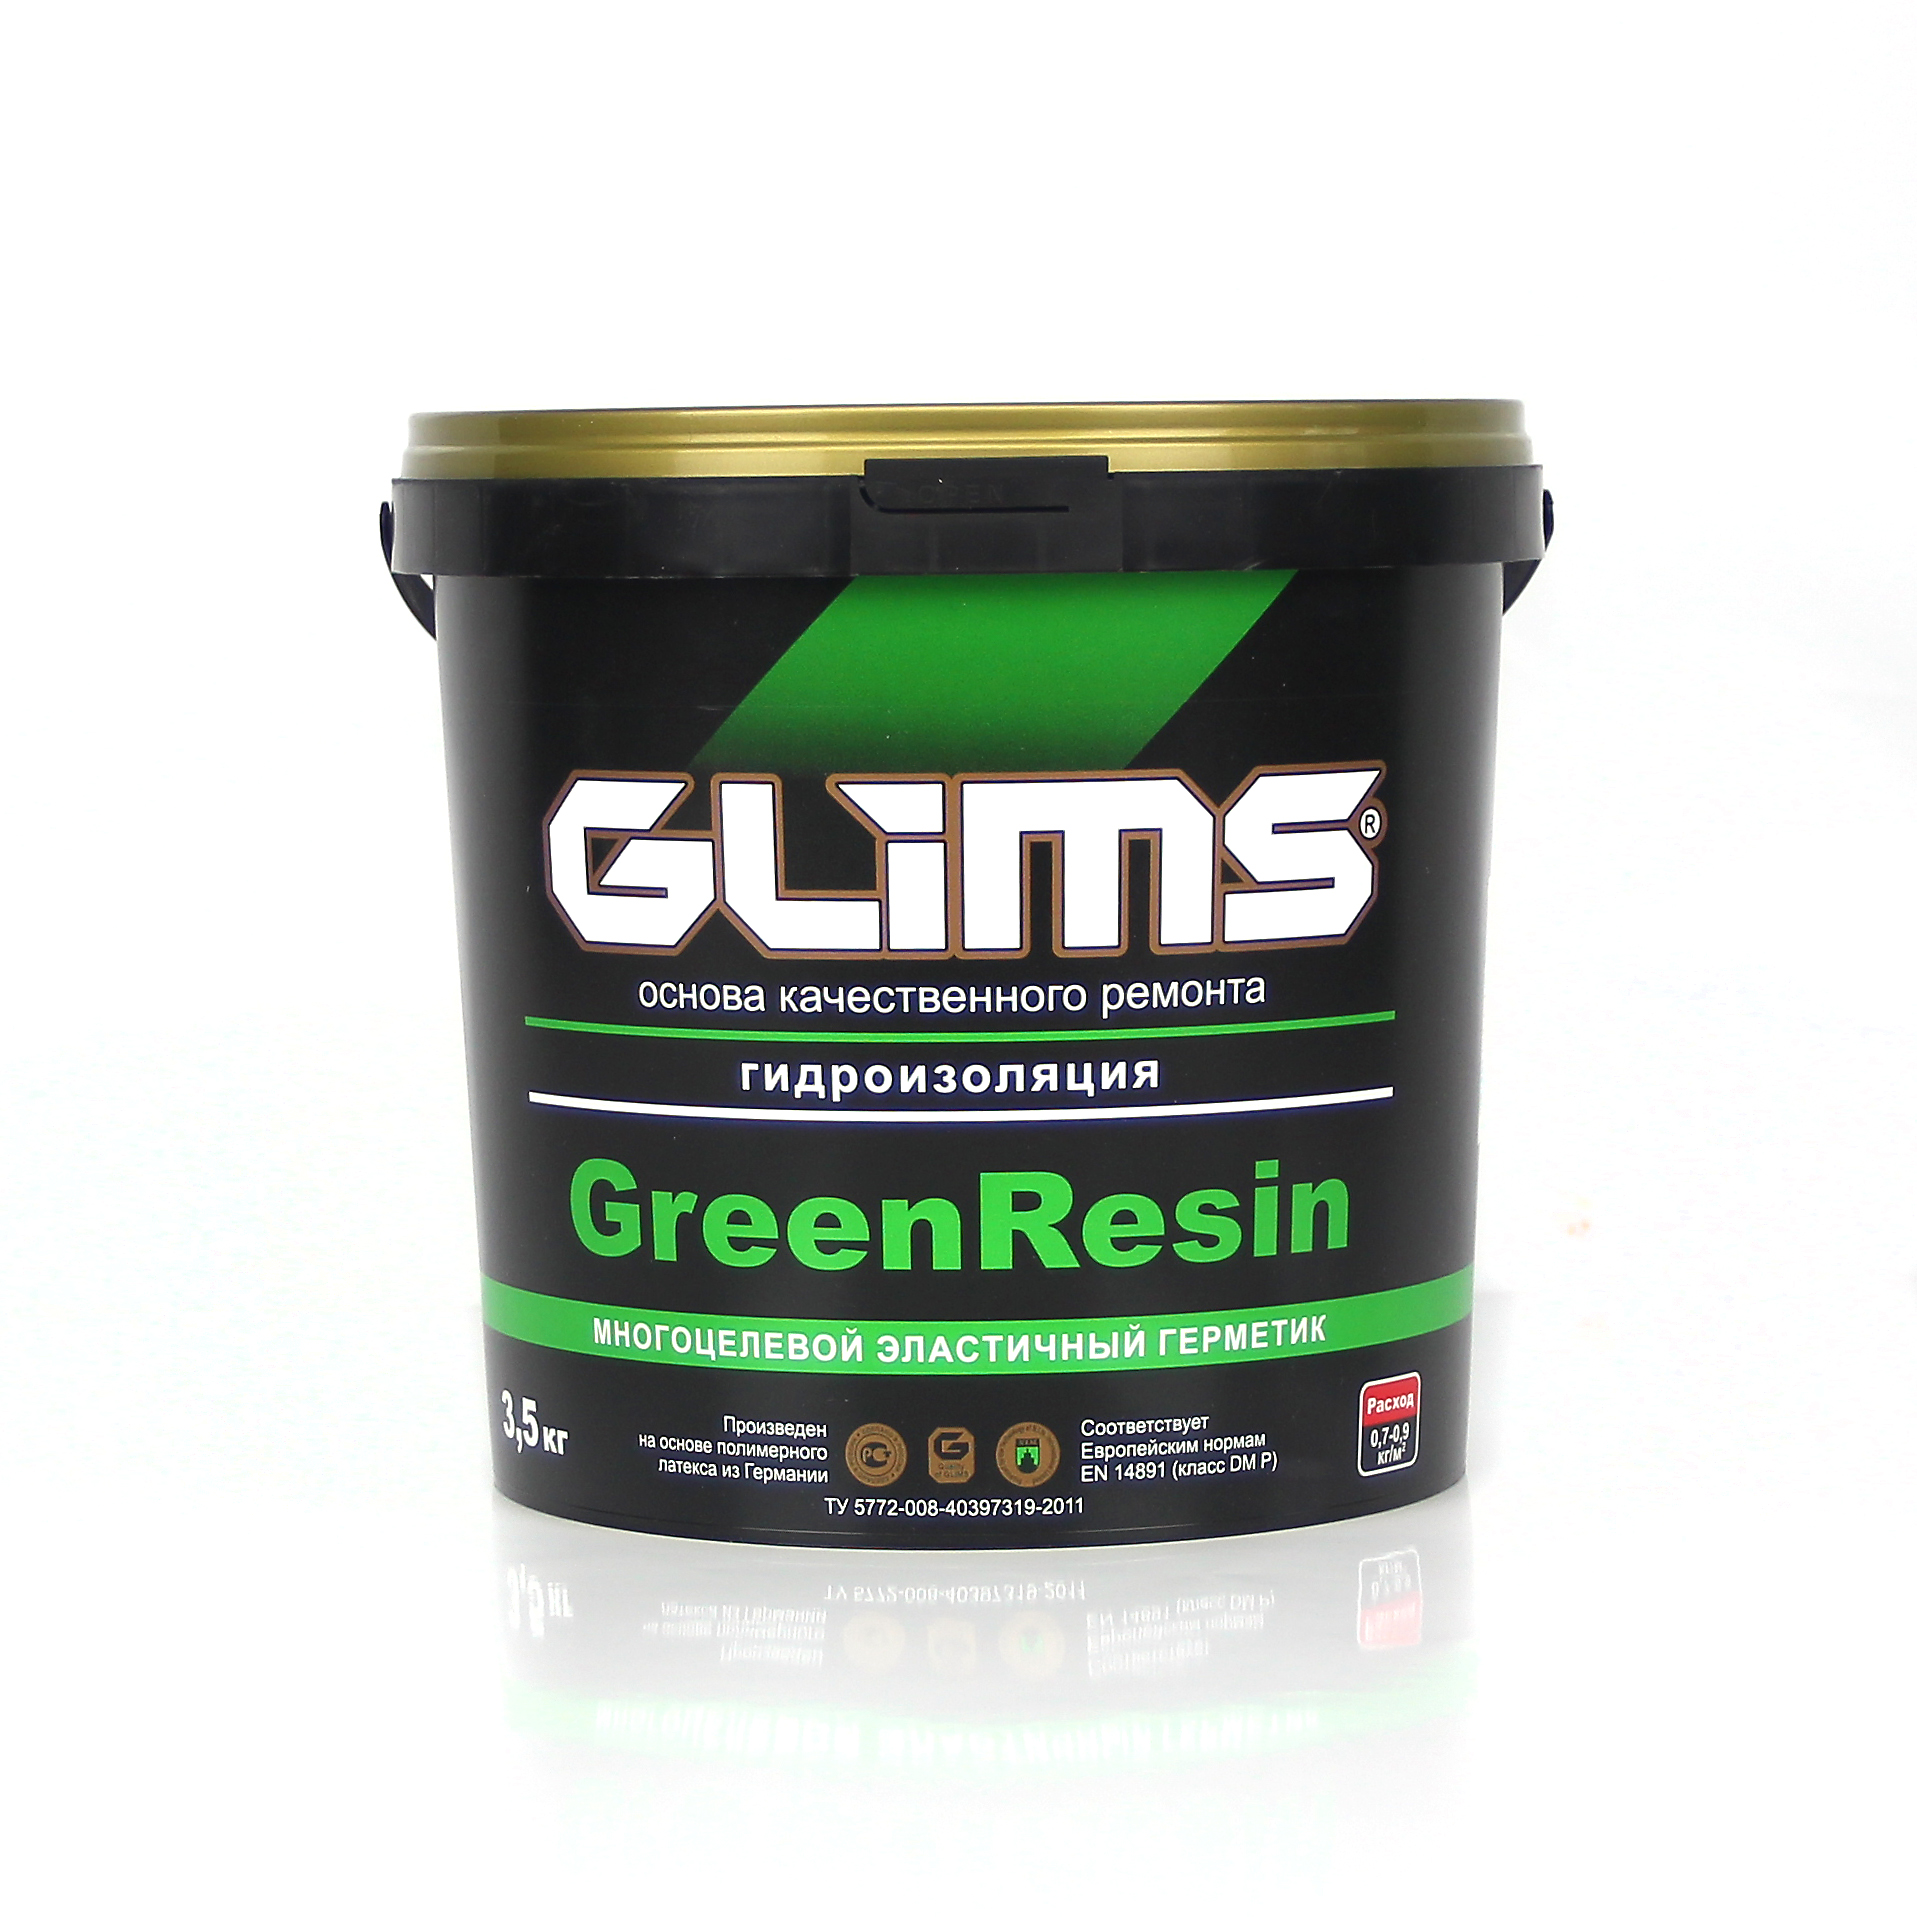 Гидроизоляция GLIMS GreenResin обмазочная на водной основе, 3.5 кг гидроизоляция эластичная glims greenresin 1 3 кг